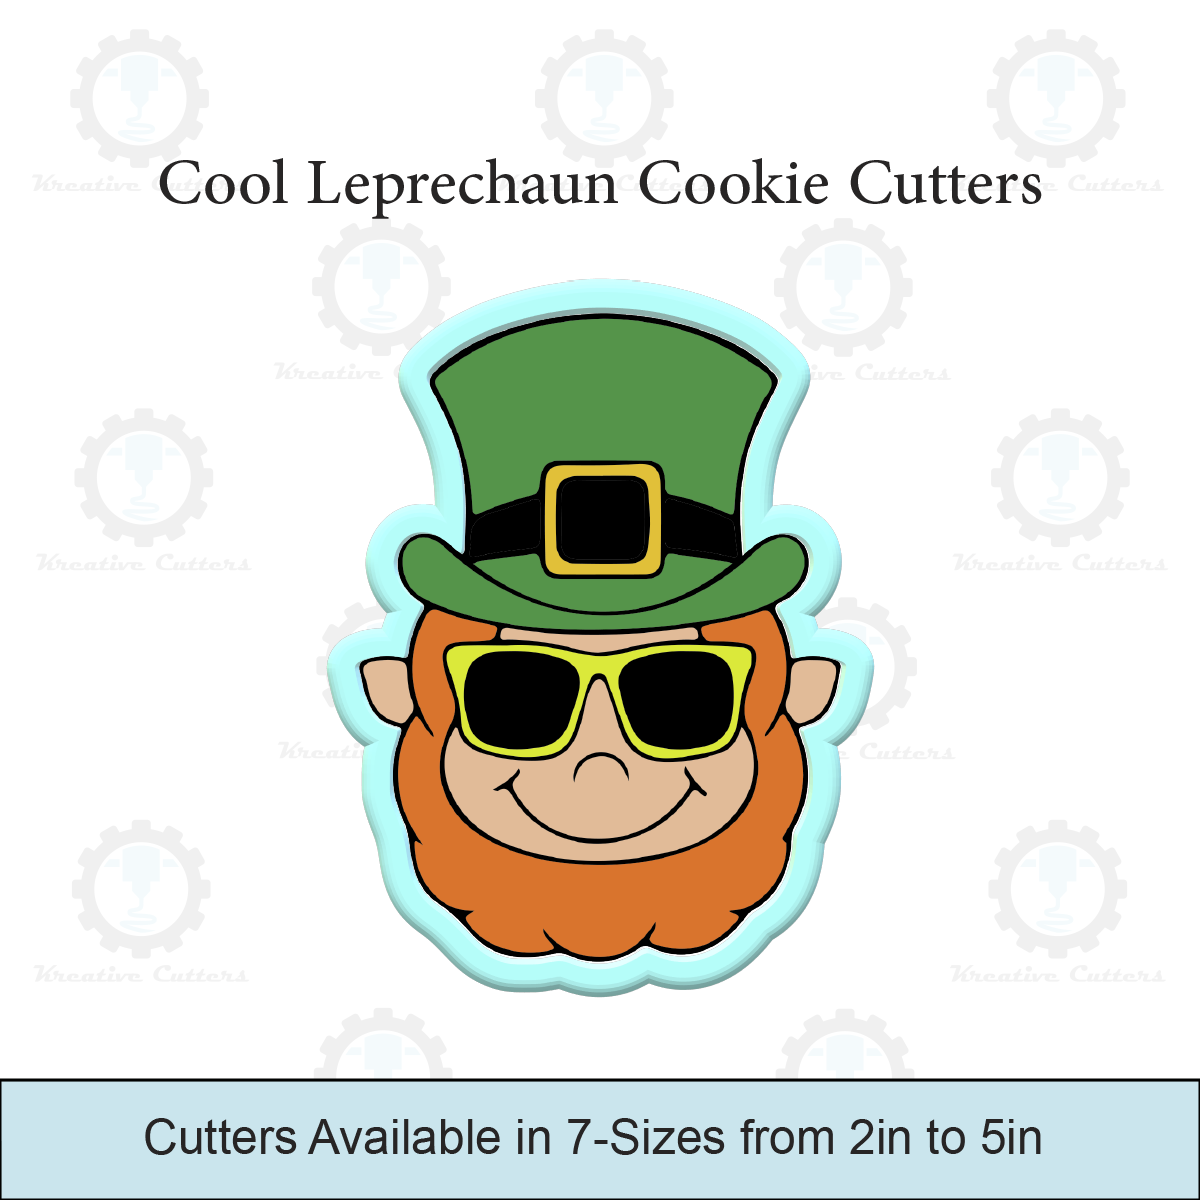 Cool Leprechaun Cookie Cutters